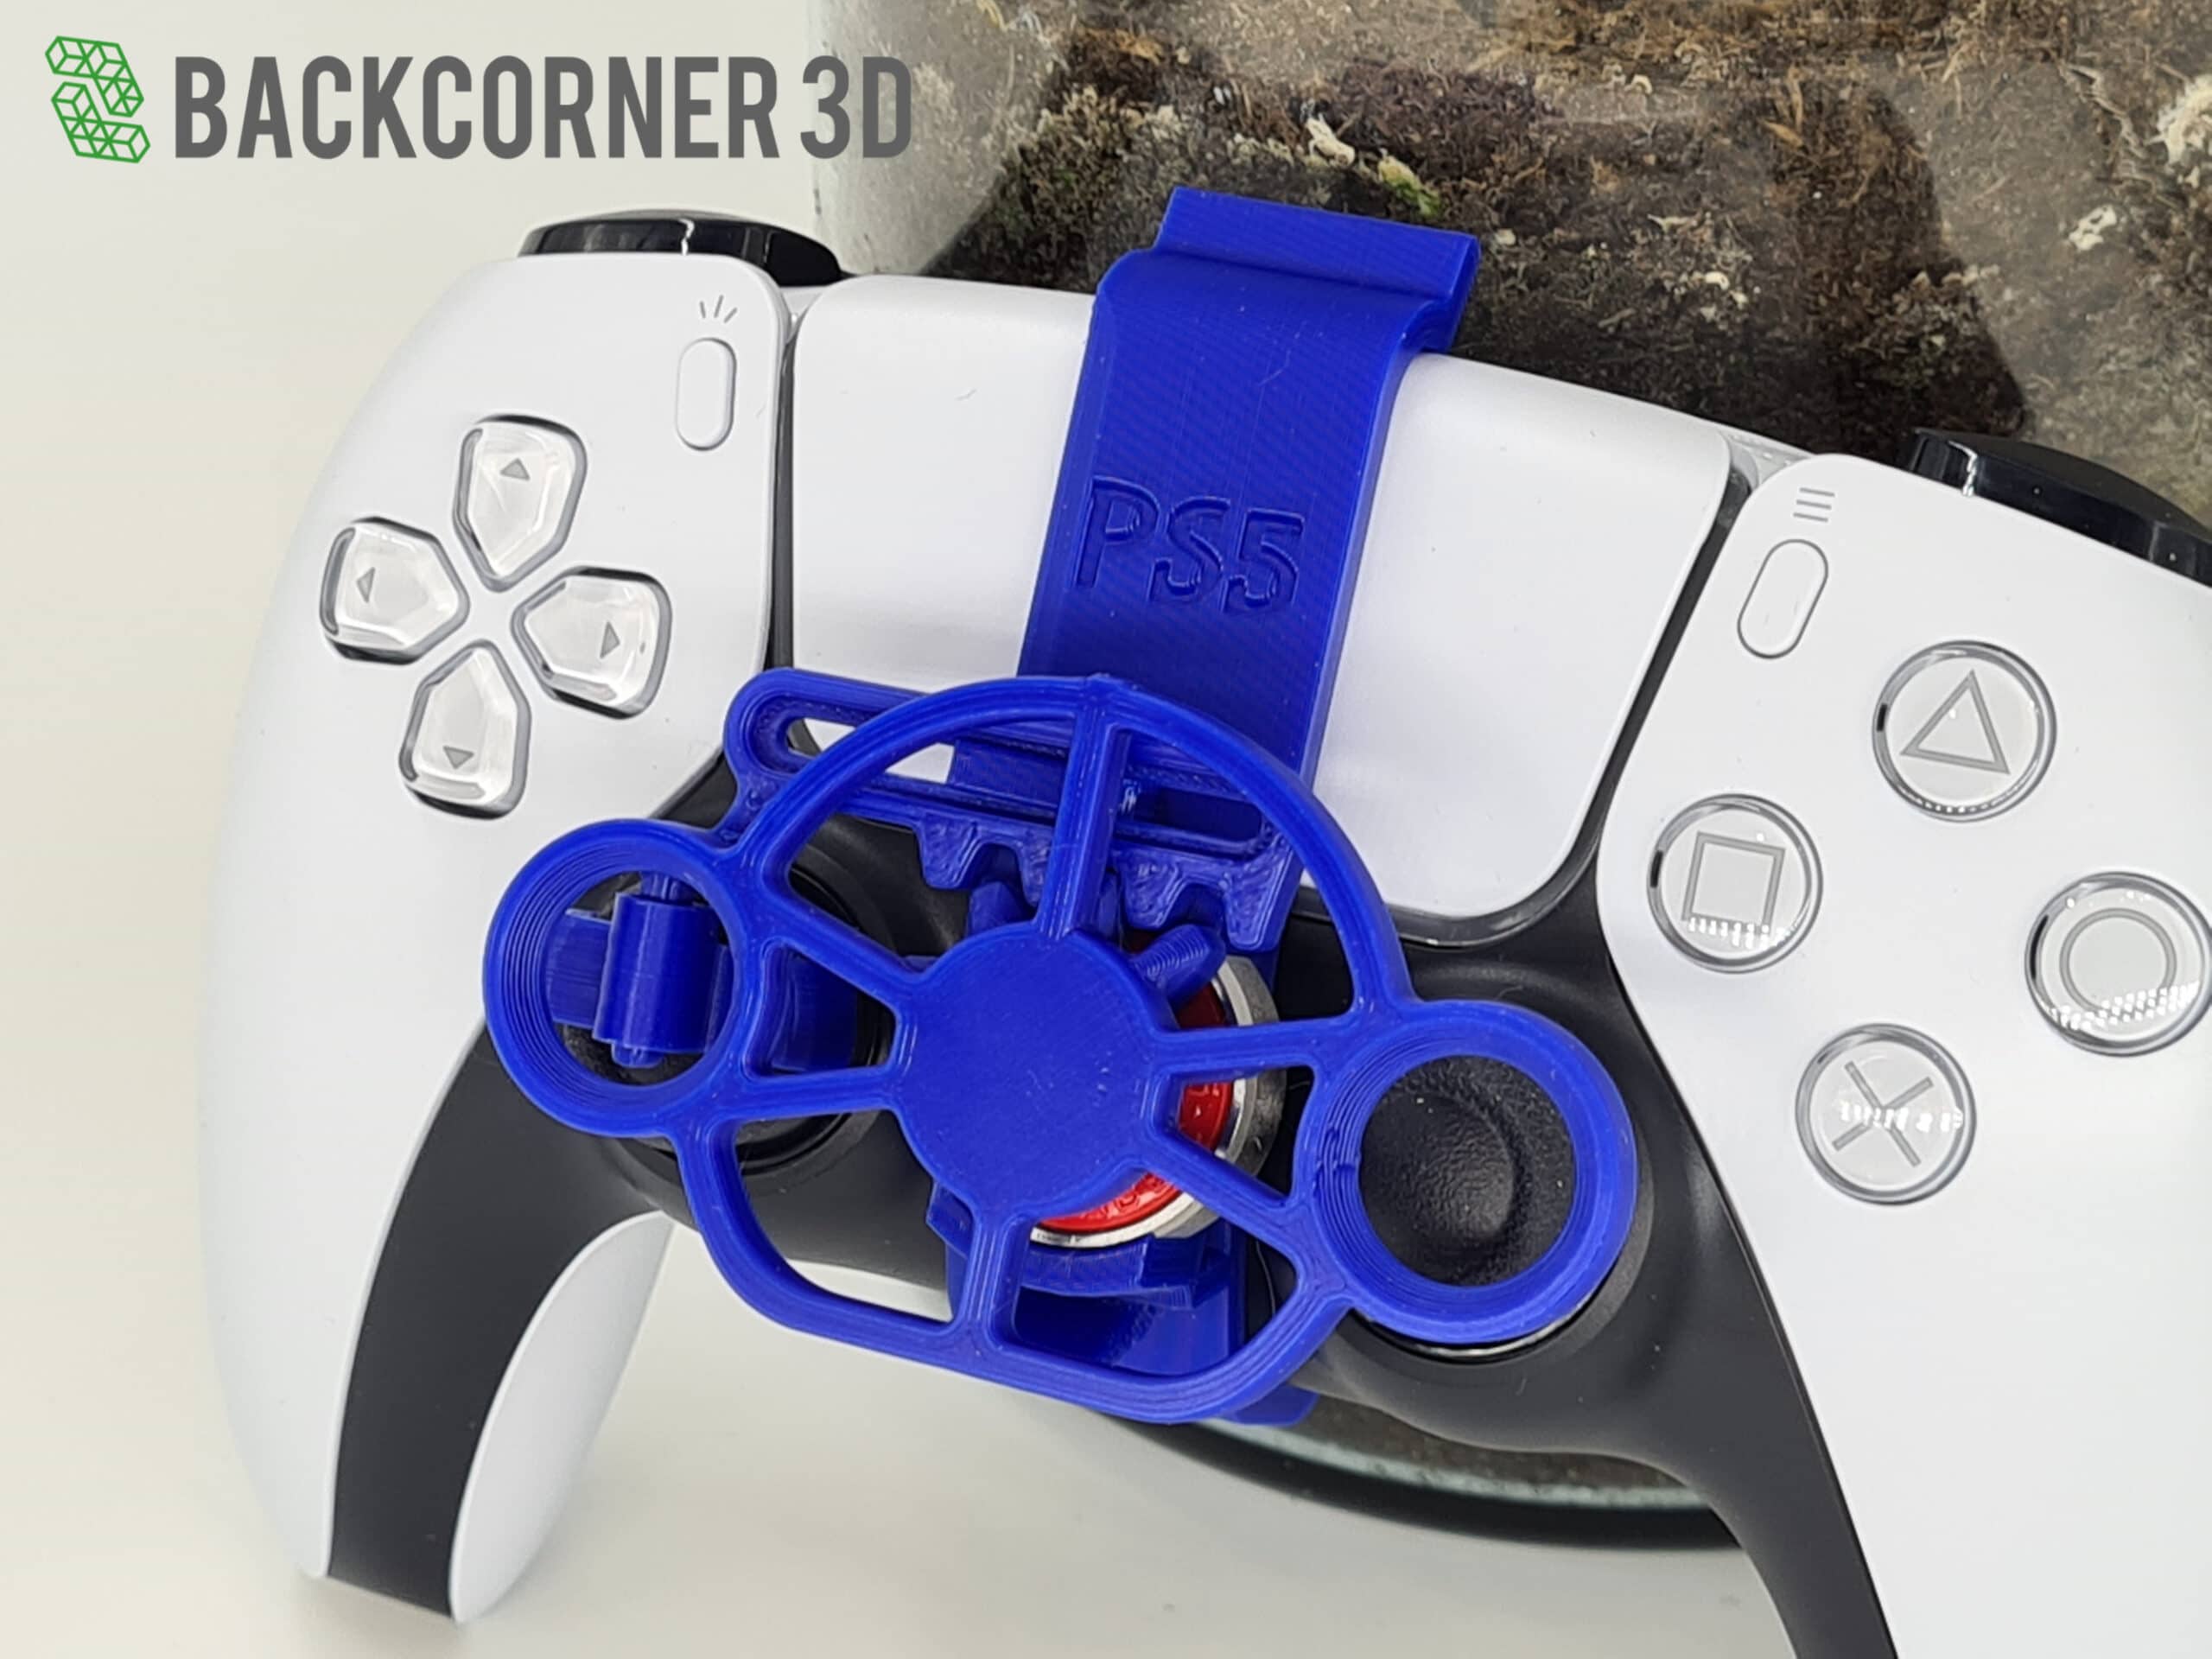 Lenkrad Für Sony PS5 Playstation 5 Controller Gaming Racing Wheel Gamepad  Joypad